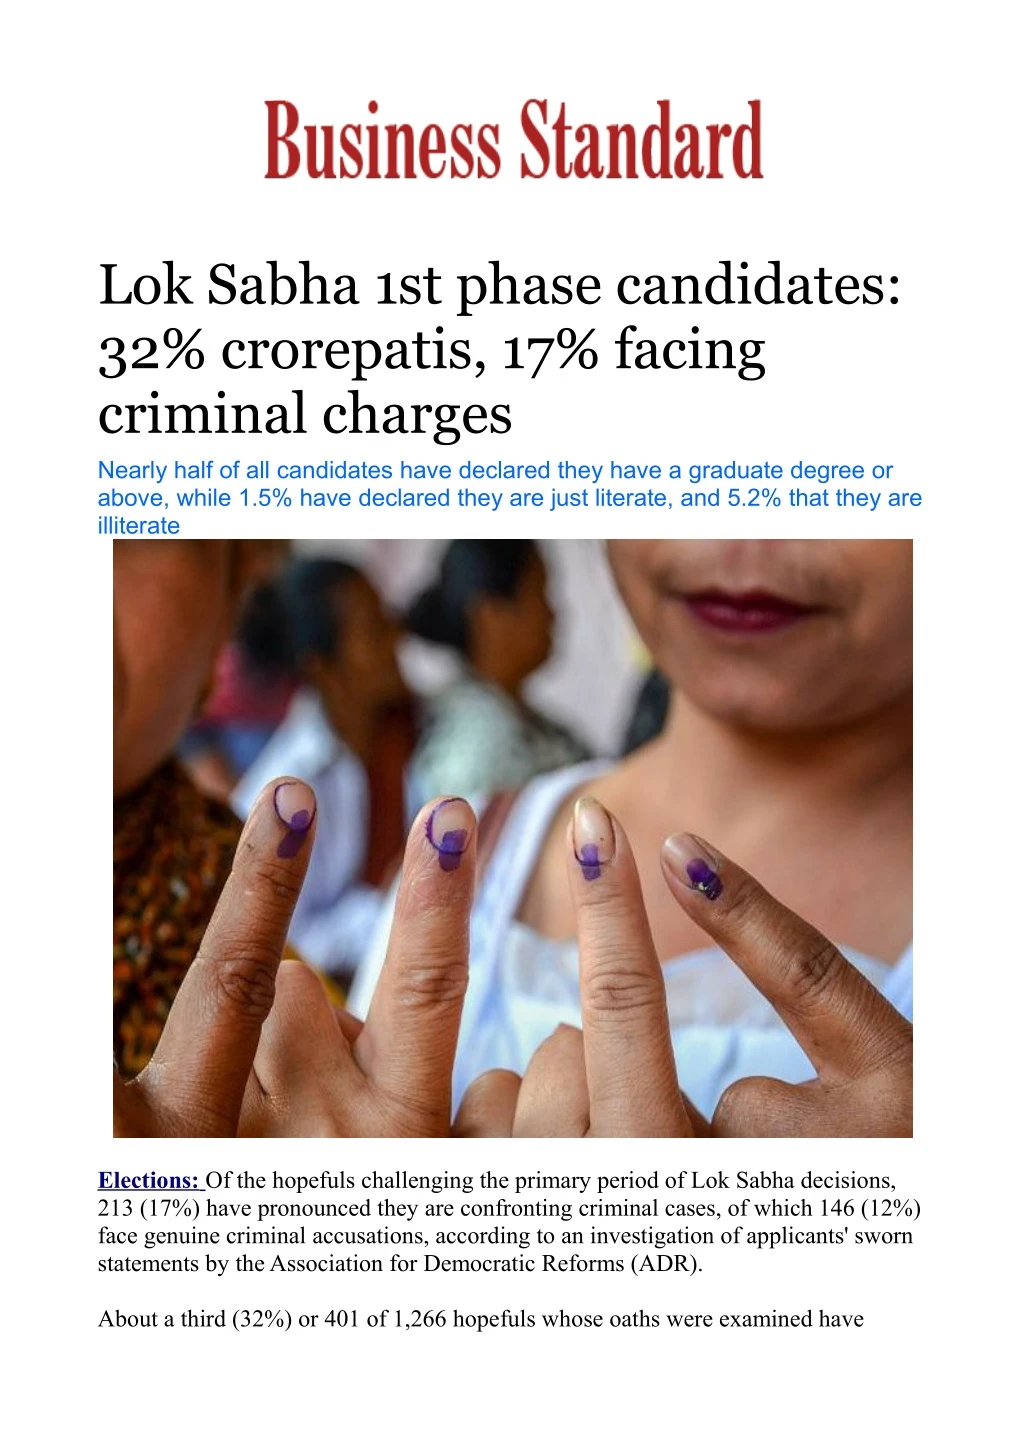 lok sabha 1st phase candidates 32 crorepatis